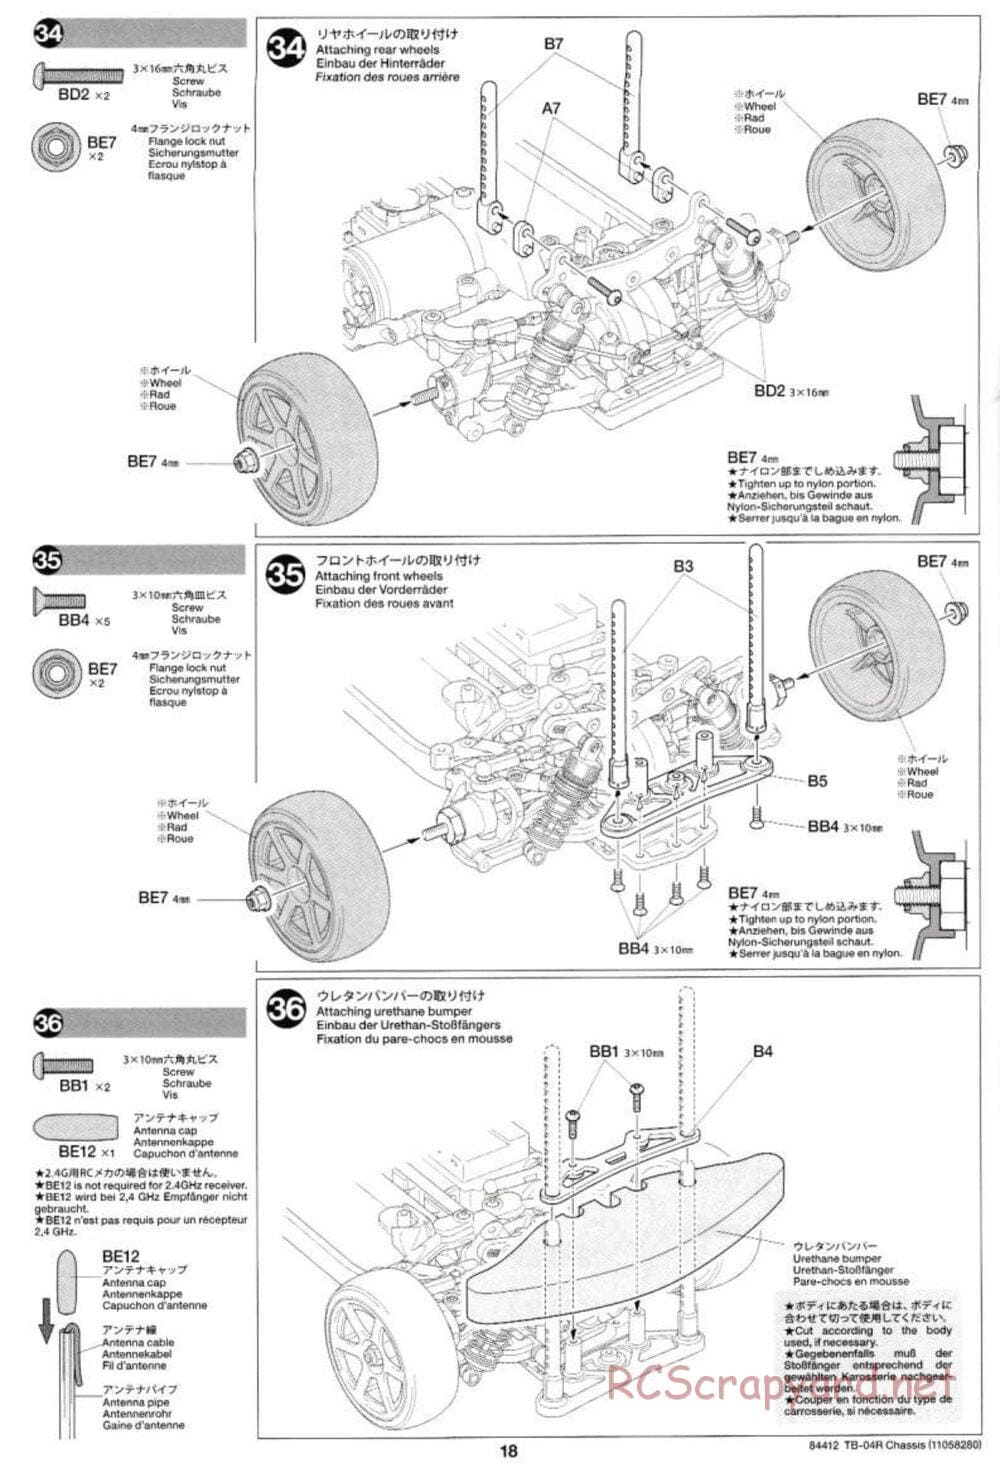 Tamiya - TB-04R Chassis Chassis - Manual - Page 18